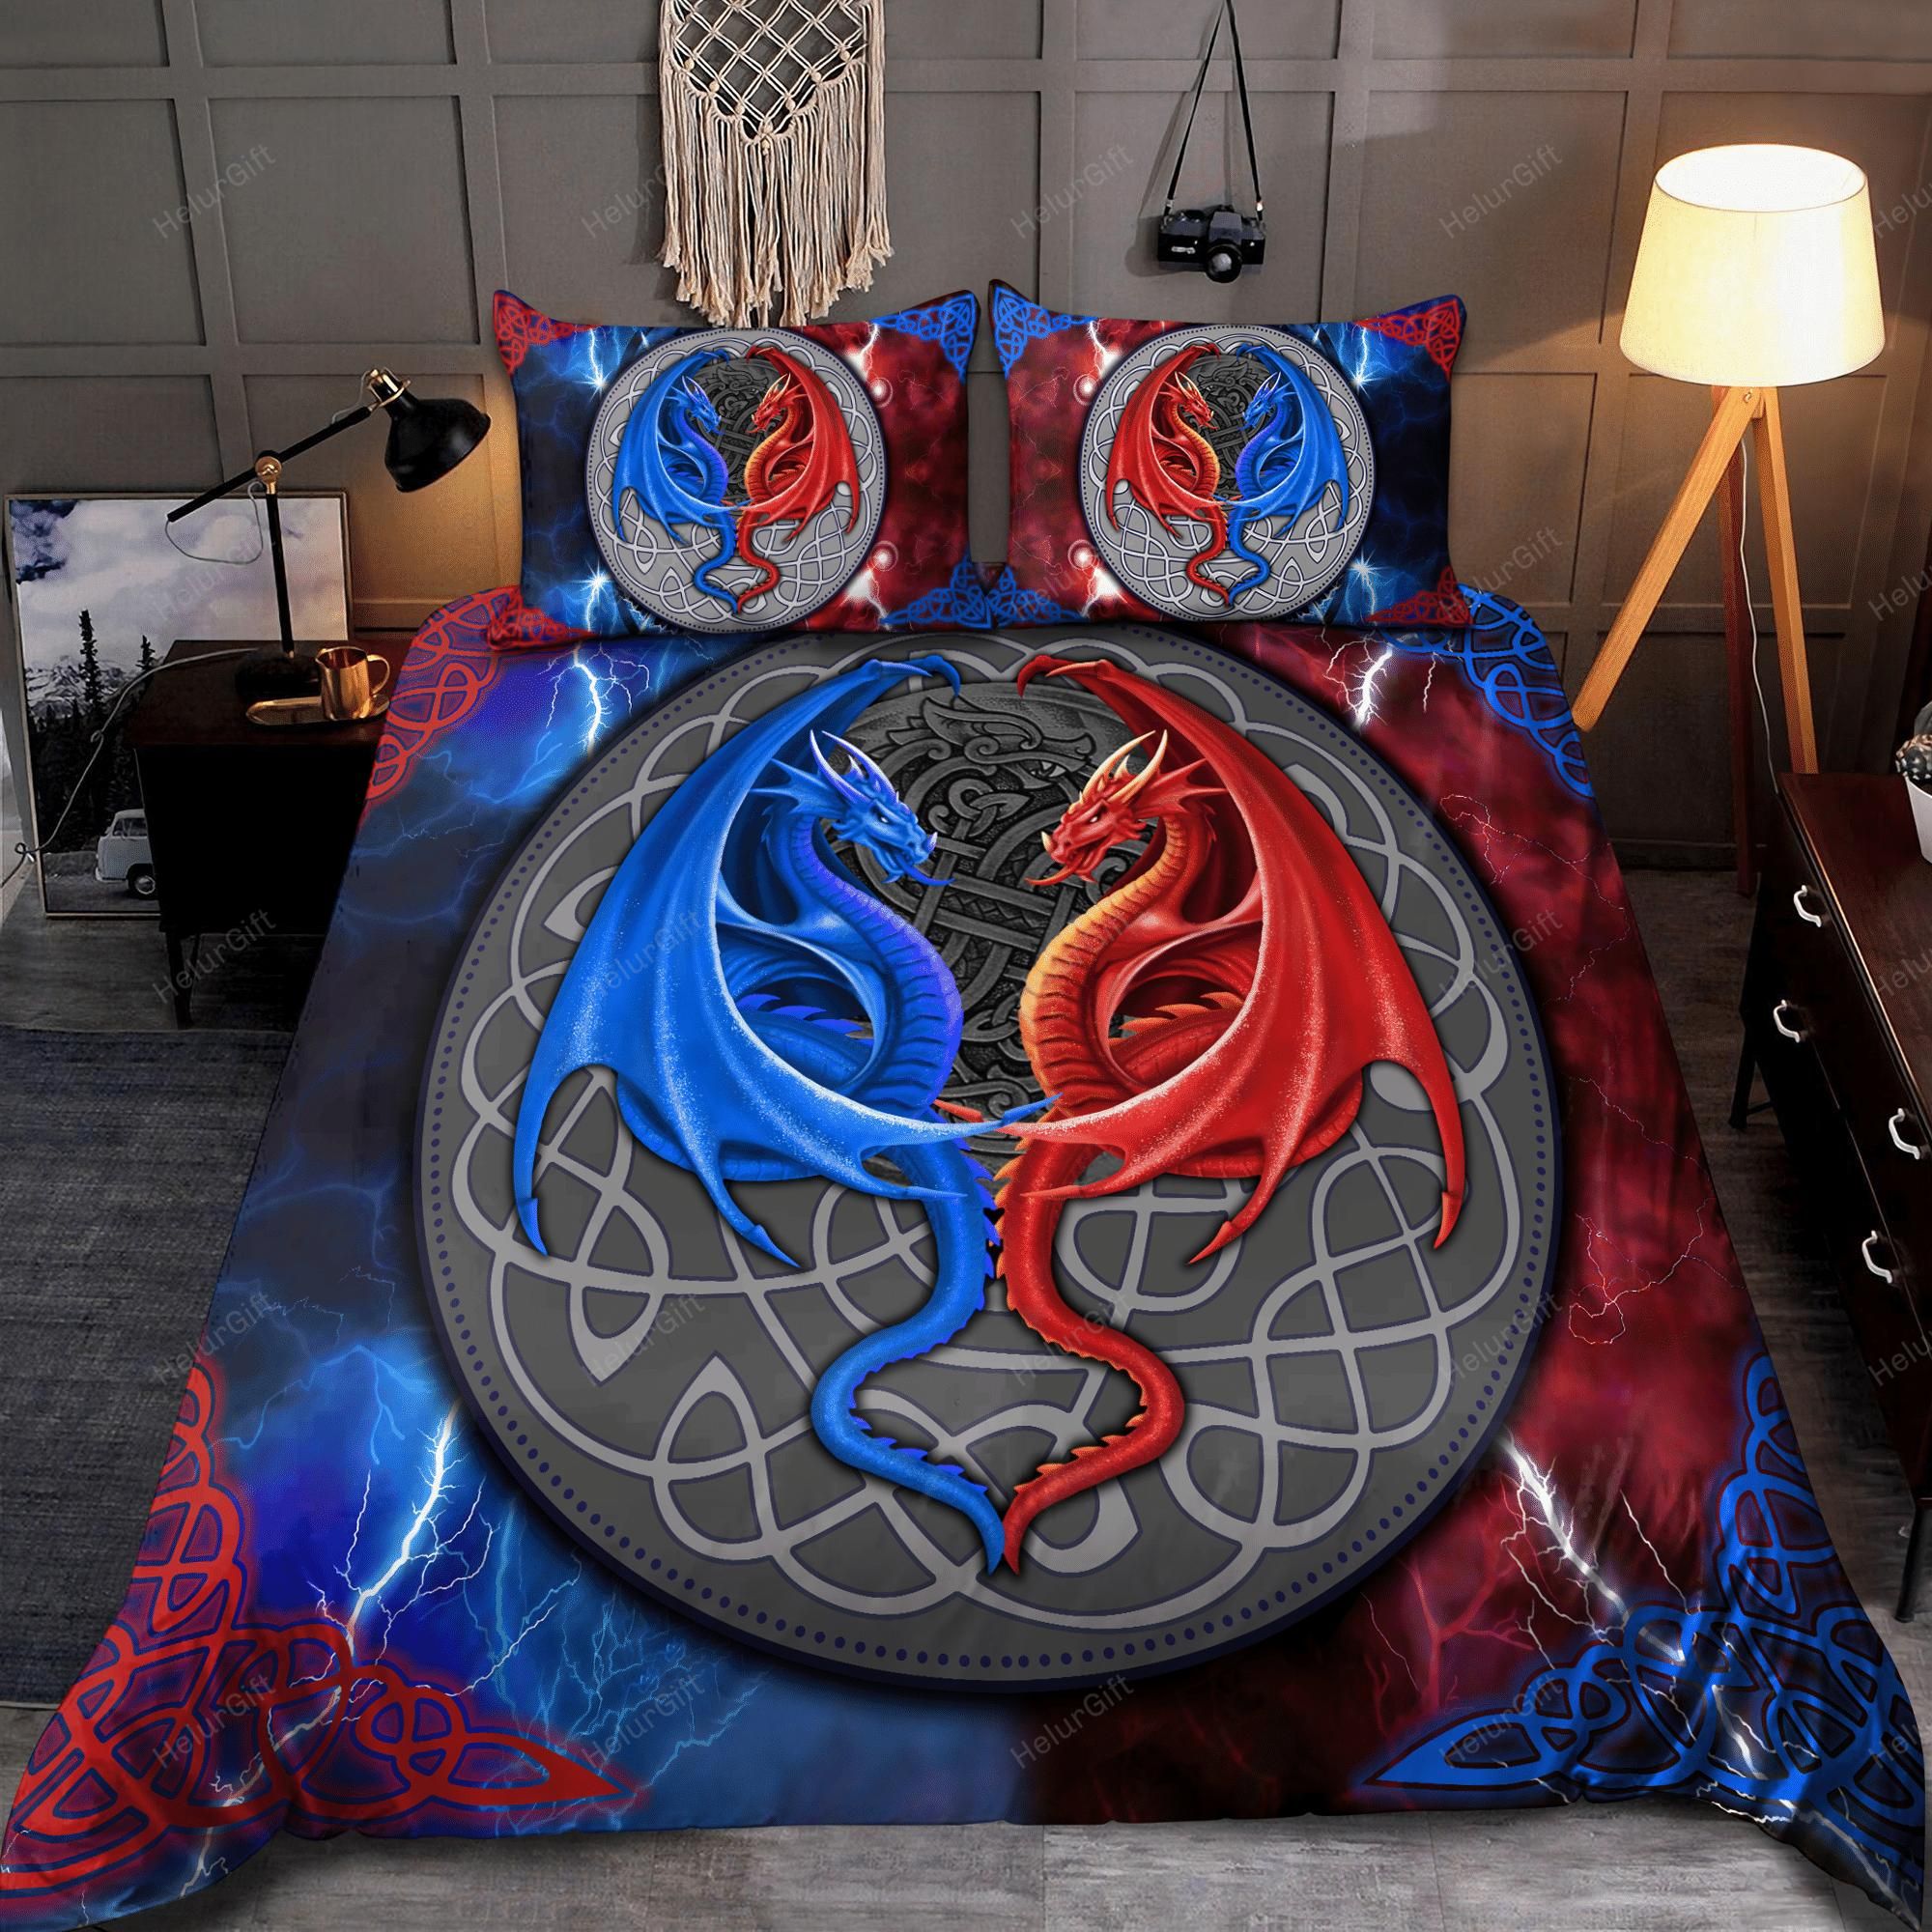 Dragon bedding set